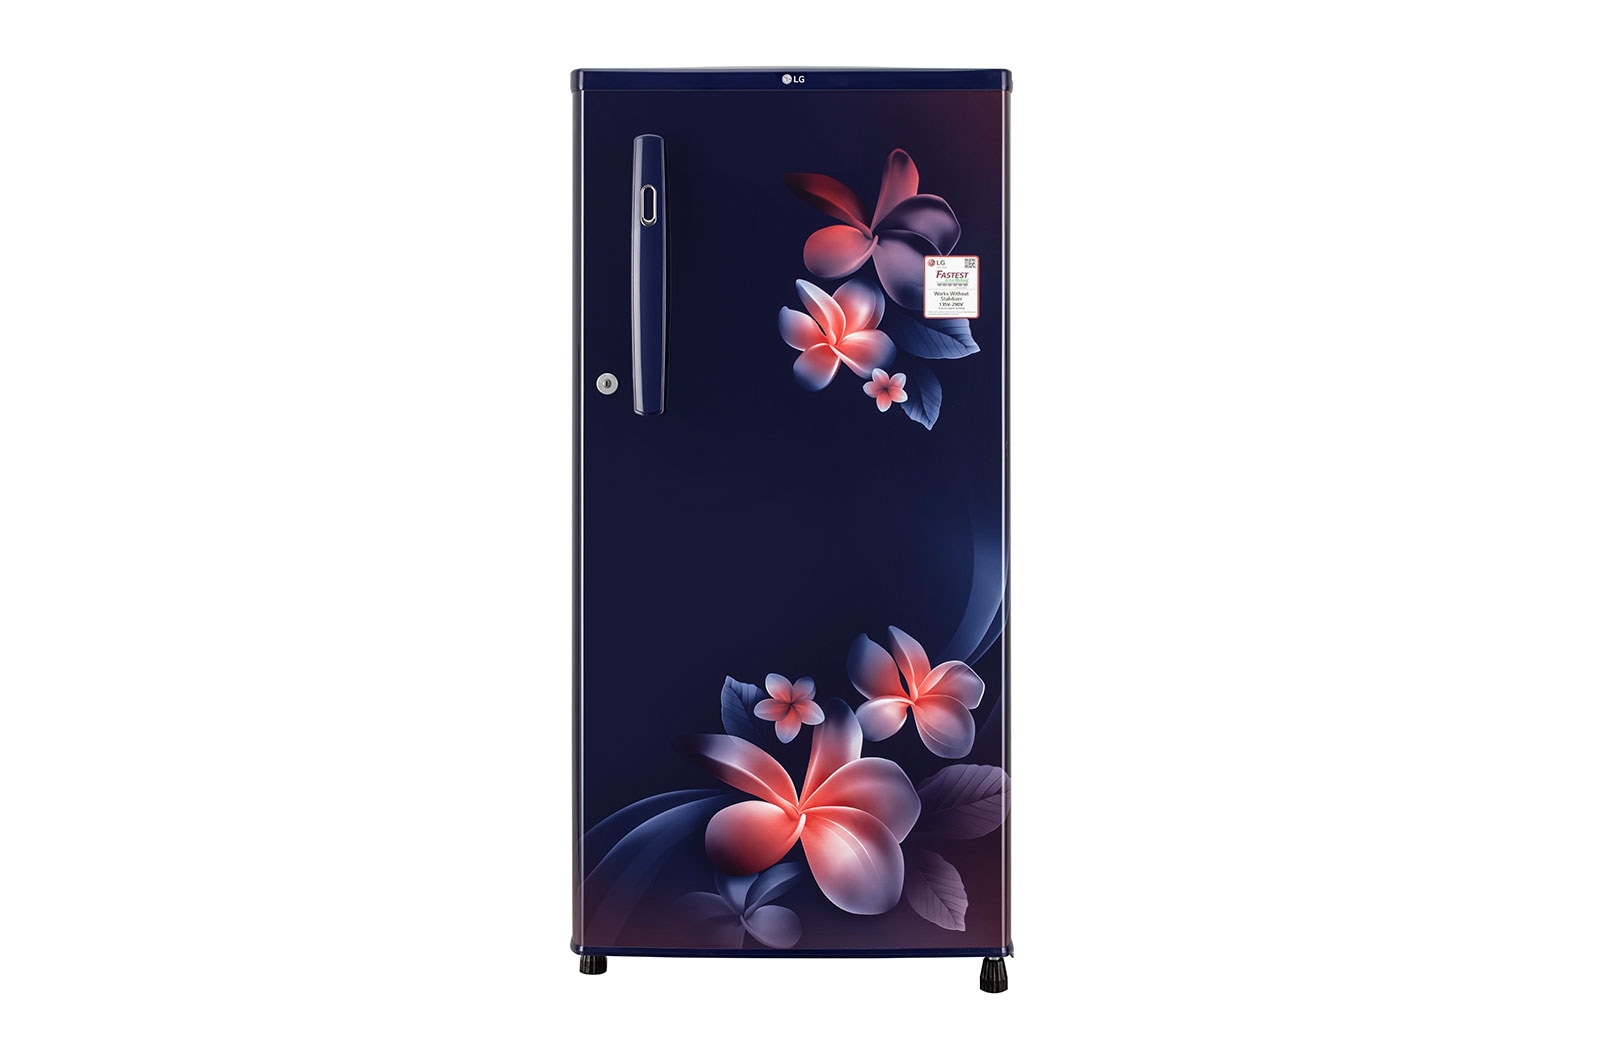 LG Refrigerator 2STAR BLUE 190L, Fast Ice Making, Toughened Glass Shelves